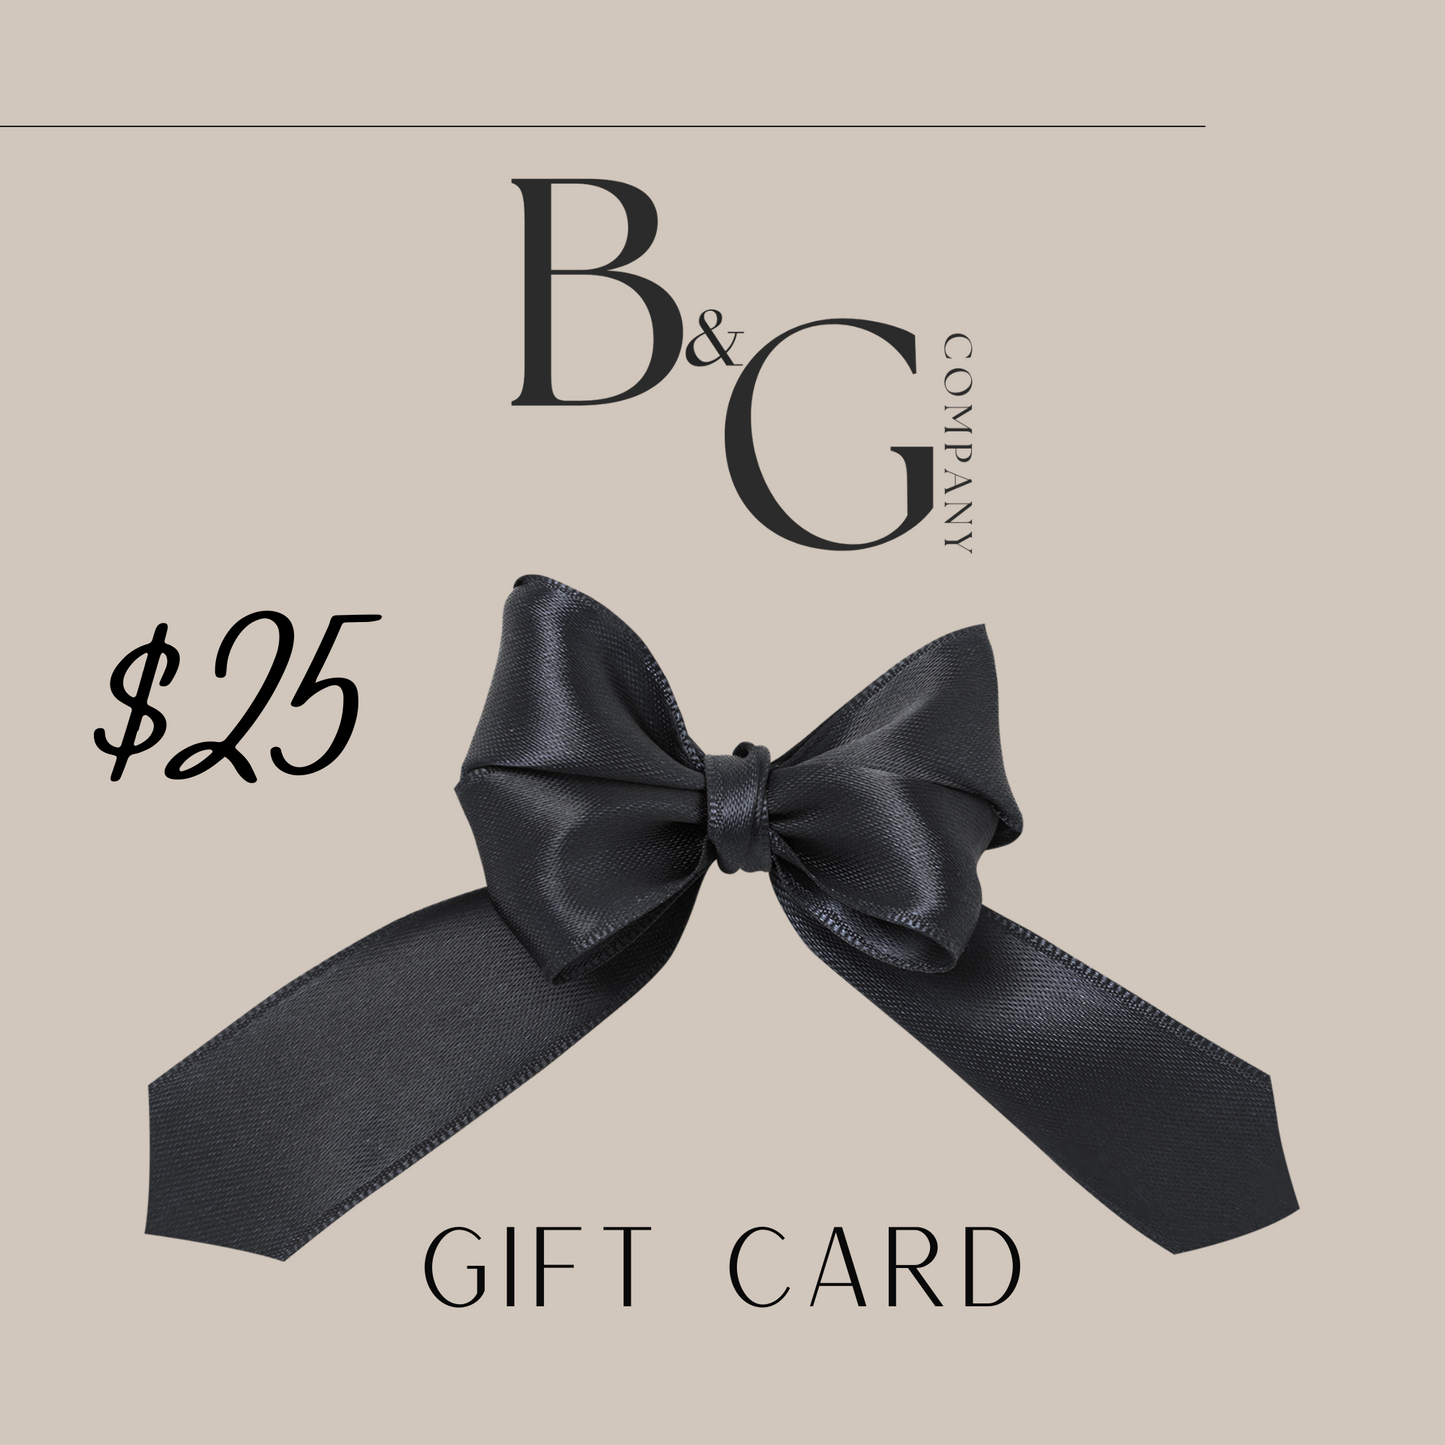 B&G Co. Gift Card